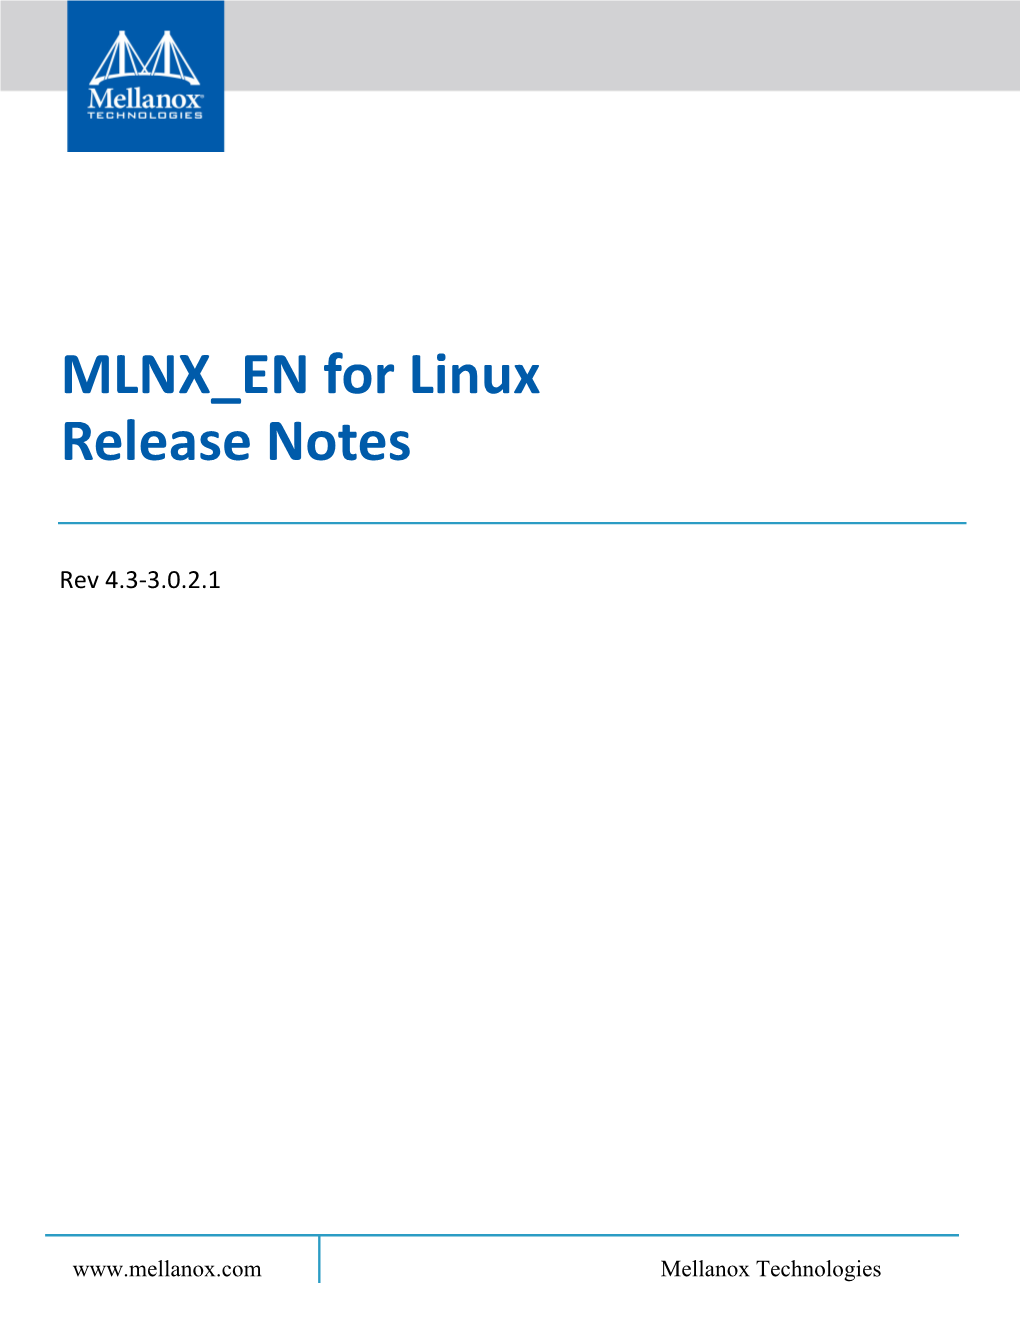 MLNX EN for Linux Release Notes